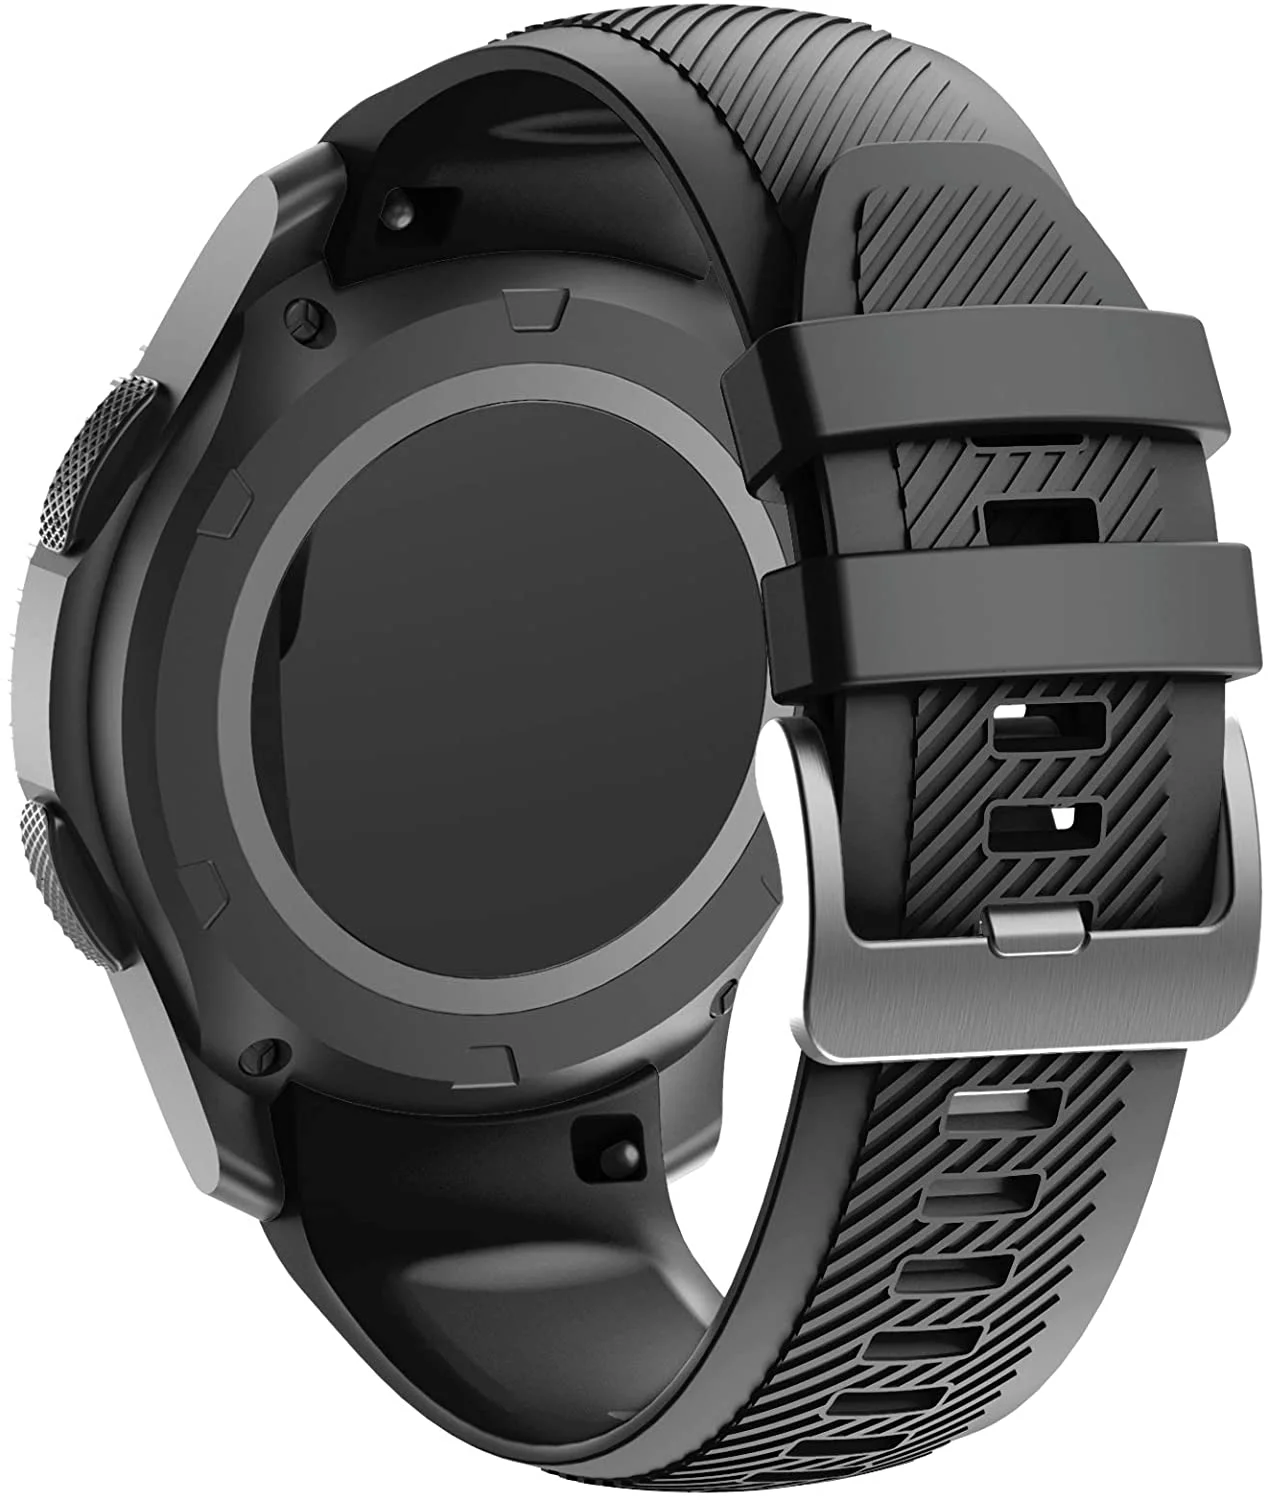 

22mm Width Watchband for Samsung Gear S3 Frontier/Classic/Galaxy Watch 46mm/Huawei Watch GT 46mm/Ticwatch pro/S2/E2 Smartwatches